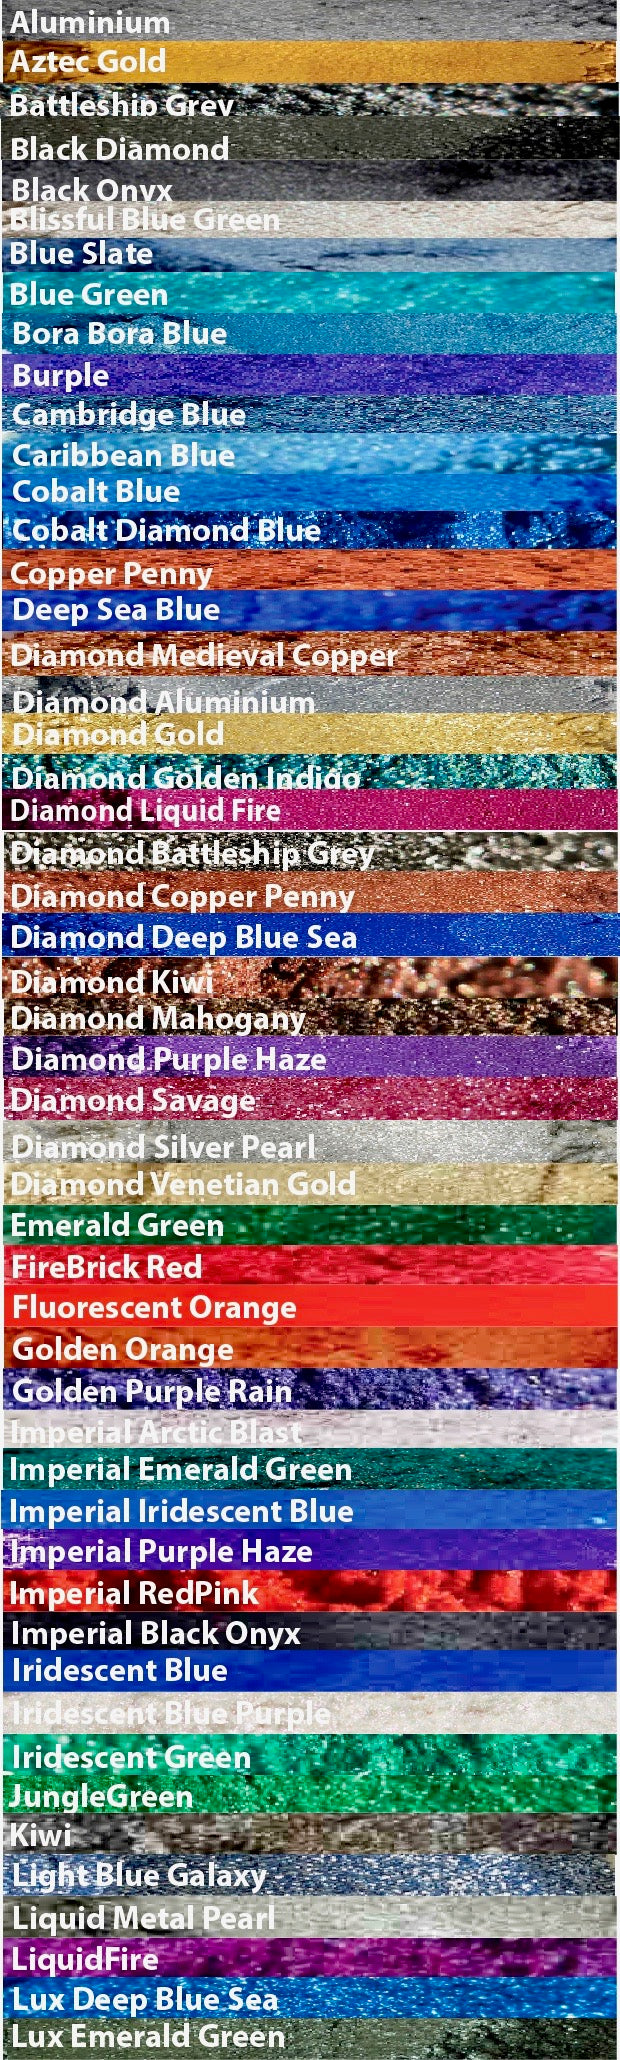 "24K GOLD" Black Diamond Pigments